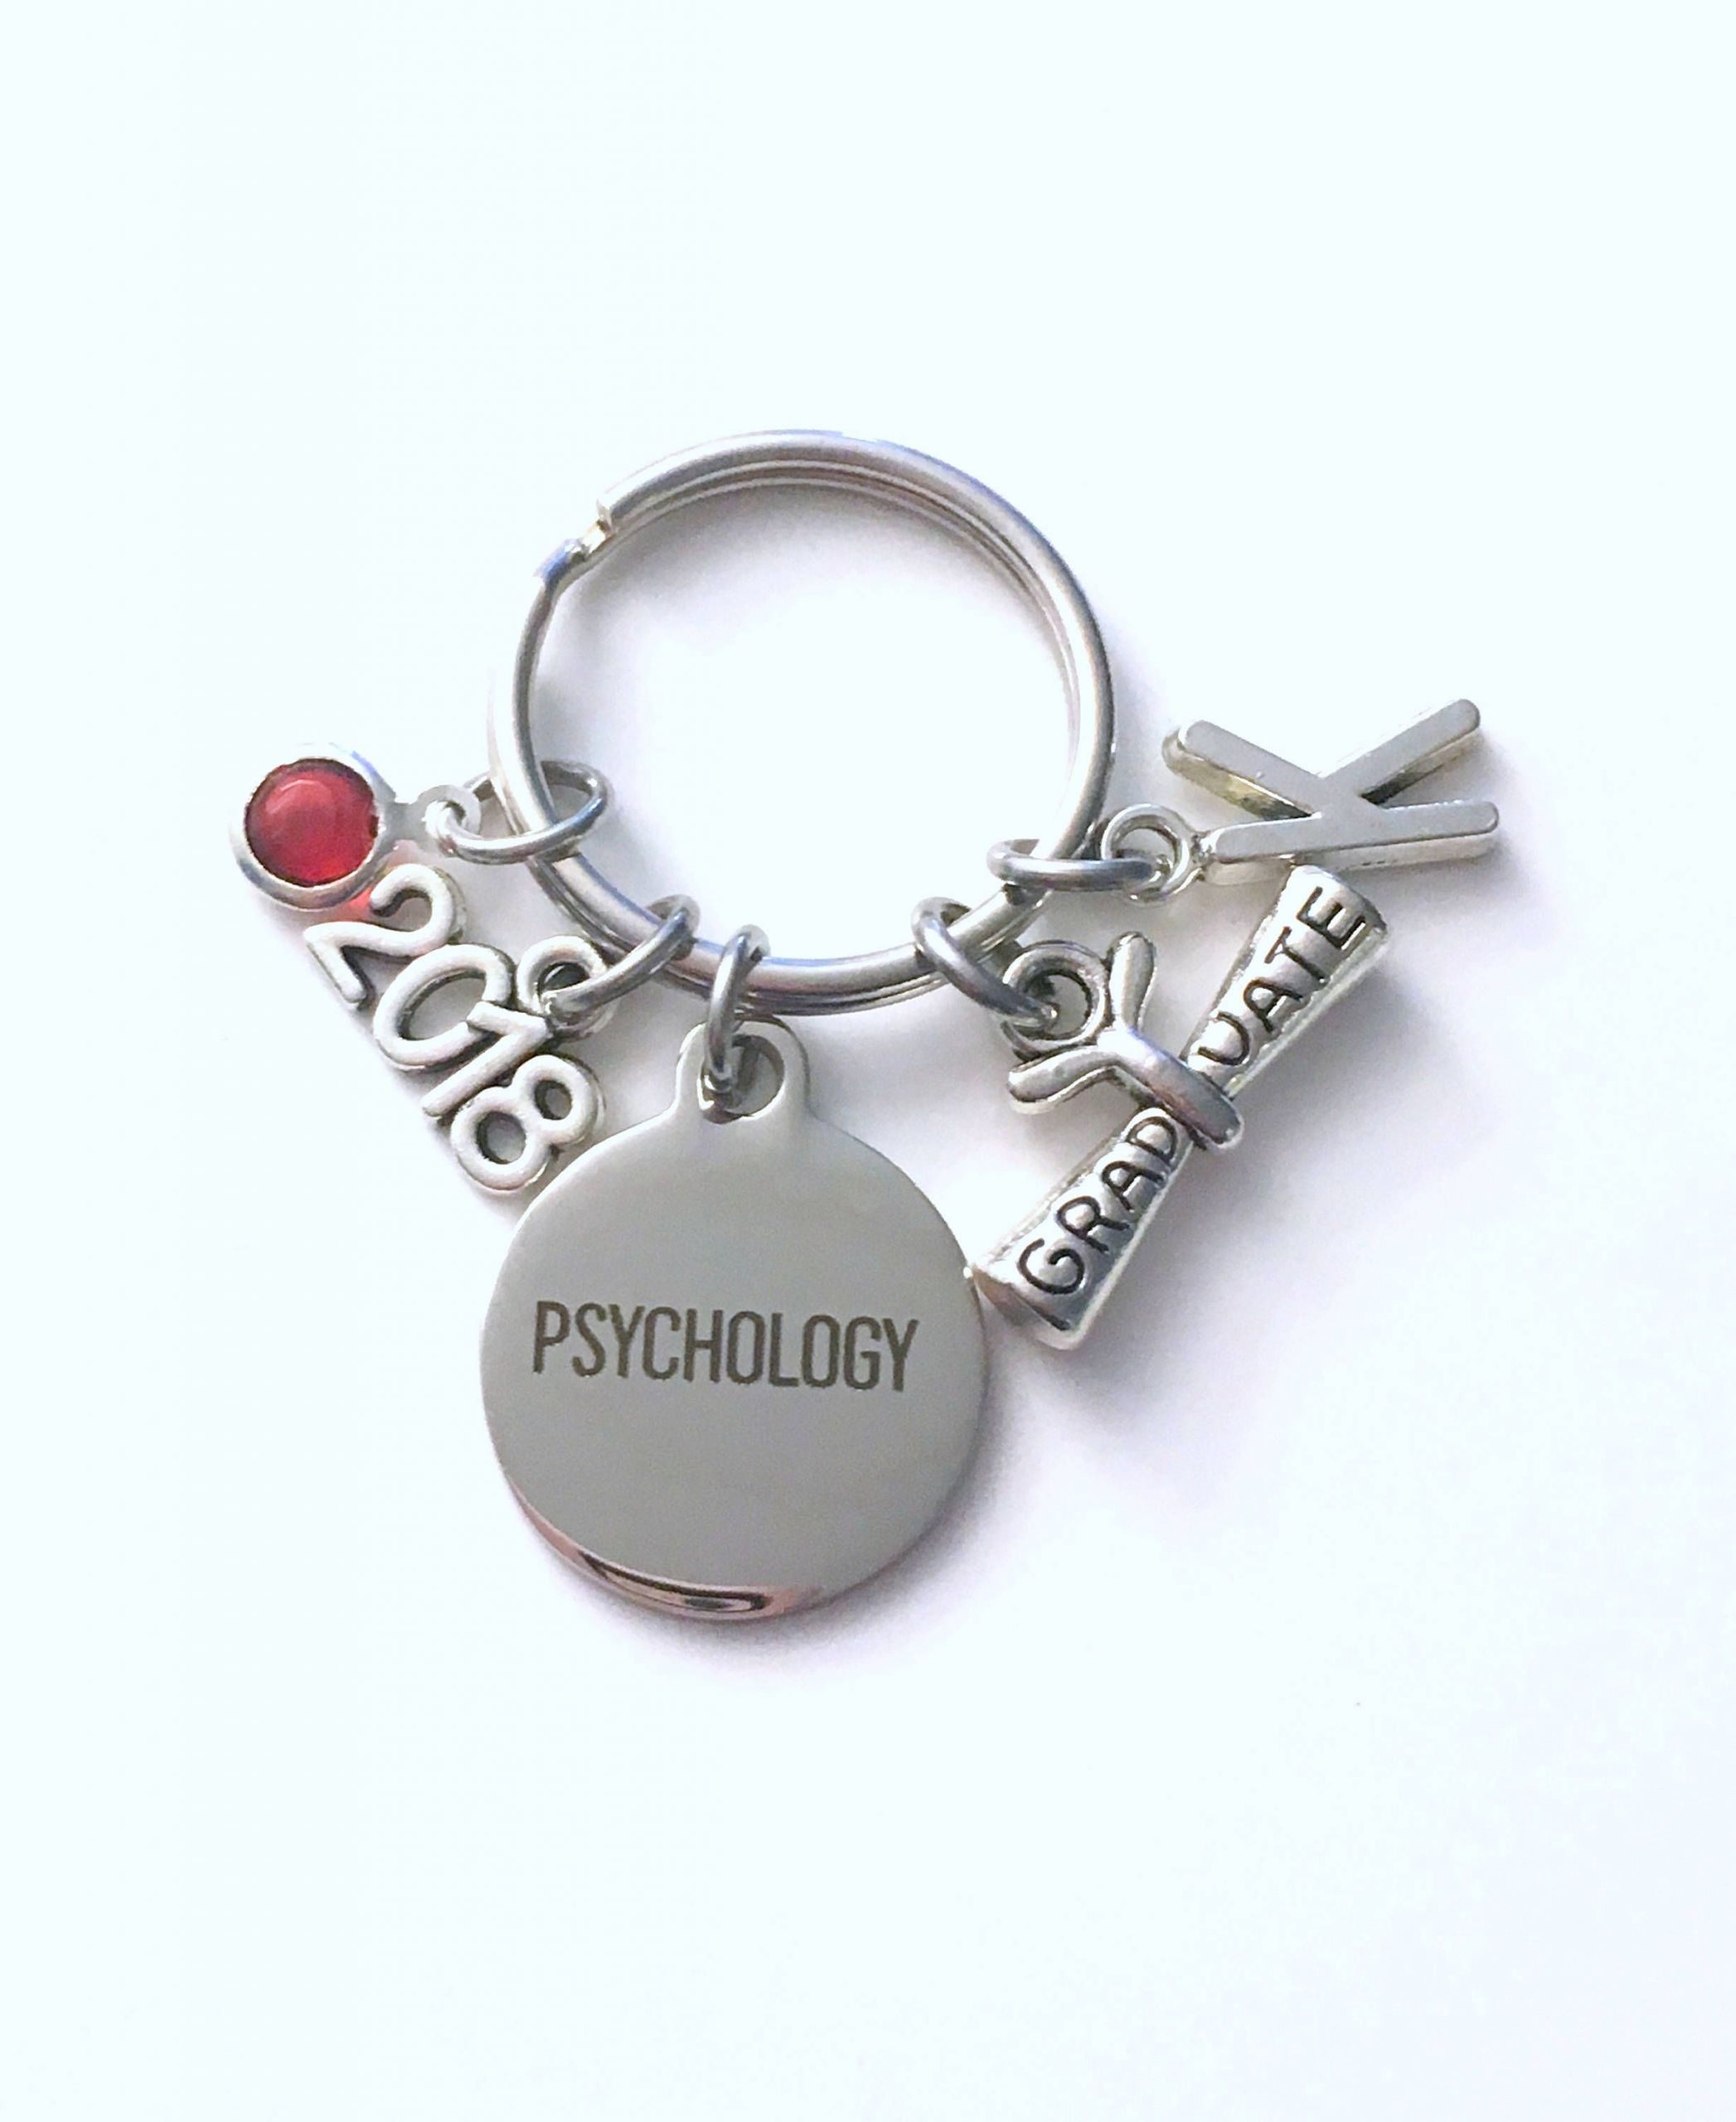 Psychology Graduation Gift Ideas
 Graduation Gift for Psychology Keychain 2019 Psychologist